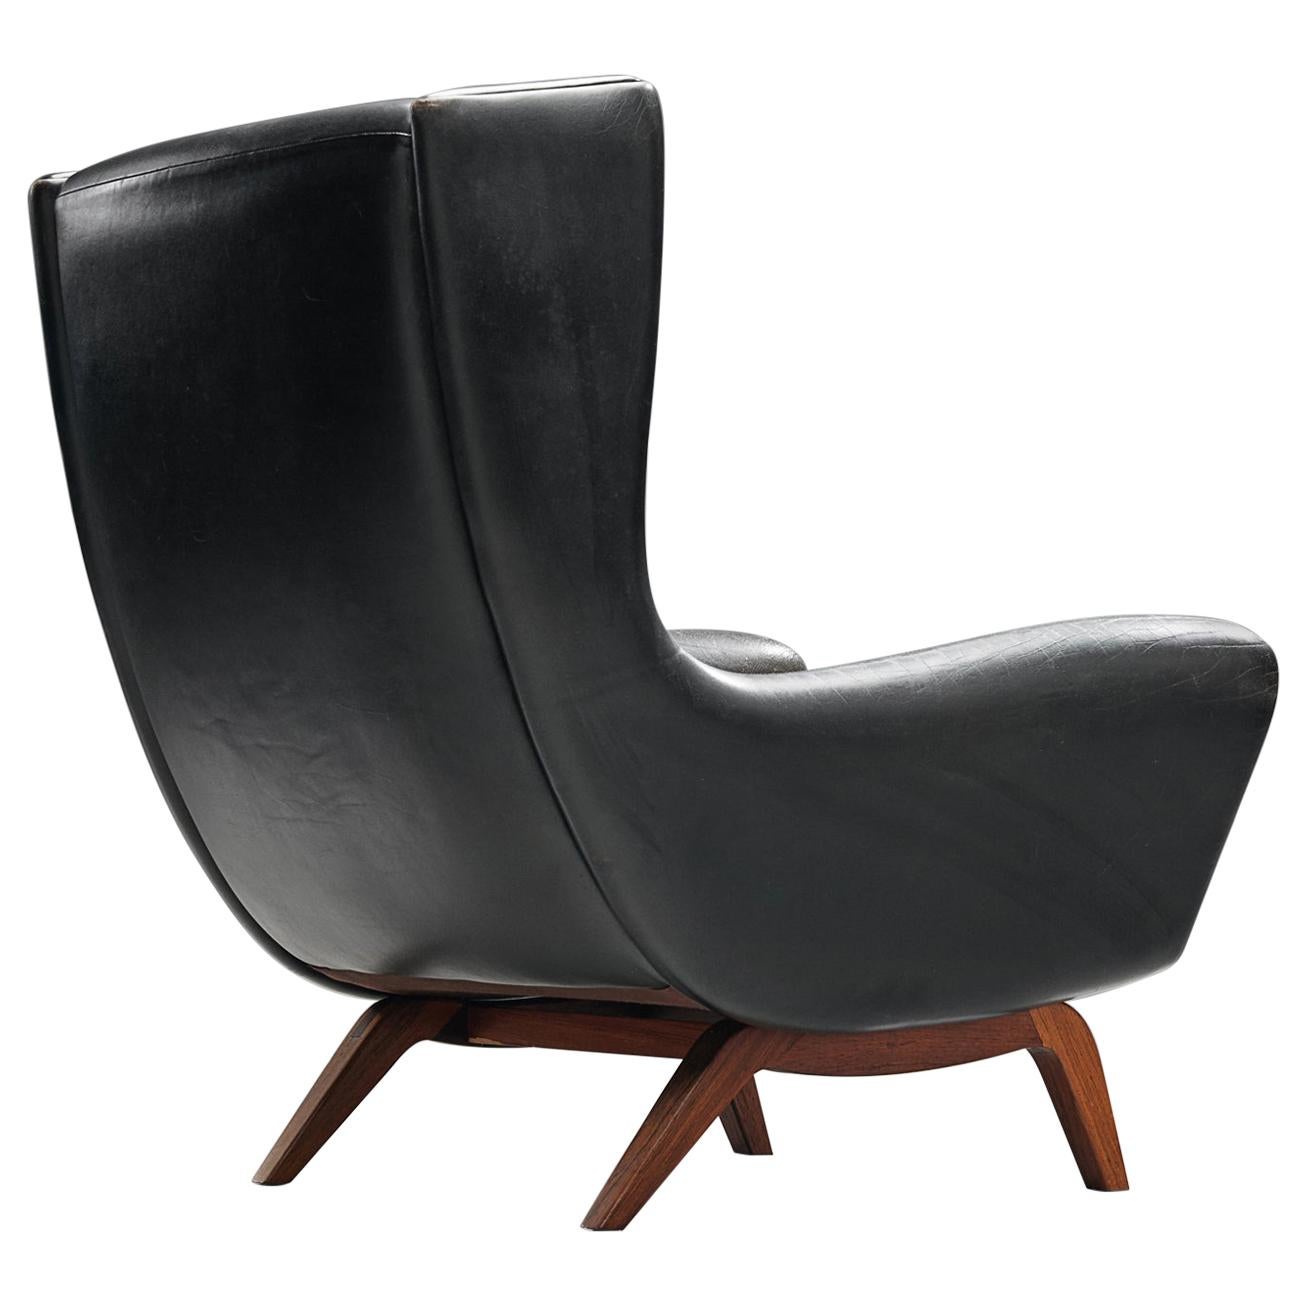 Illum Wikkelsø Original Leather Lounge Chair